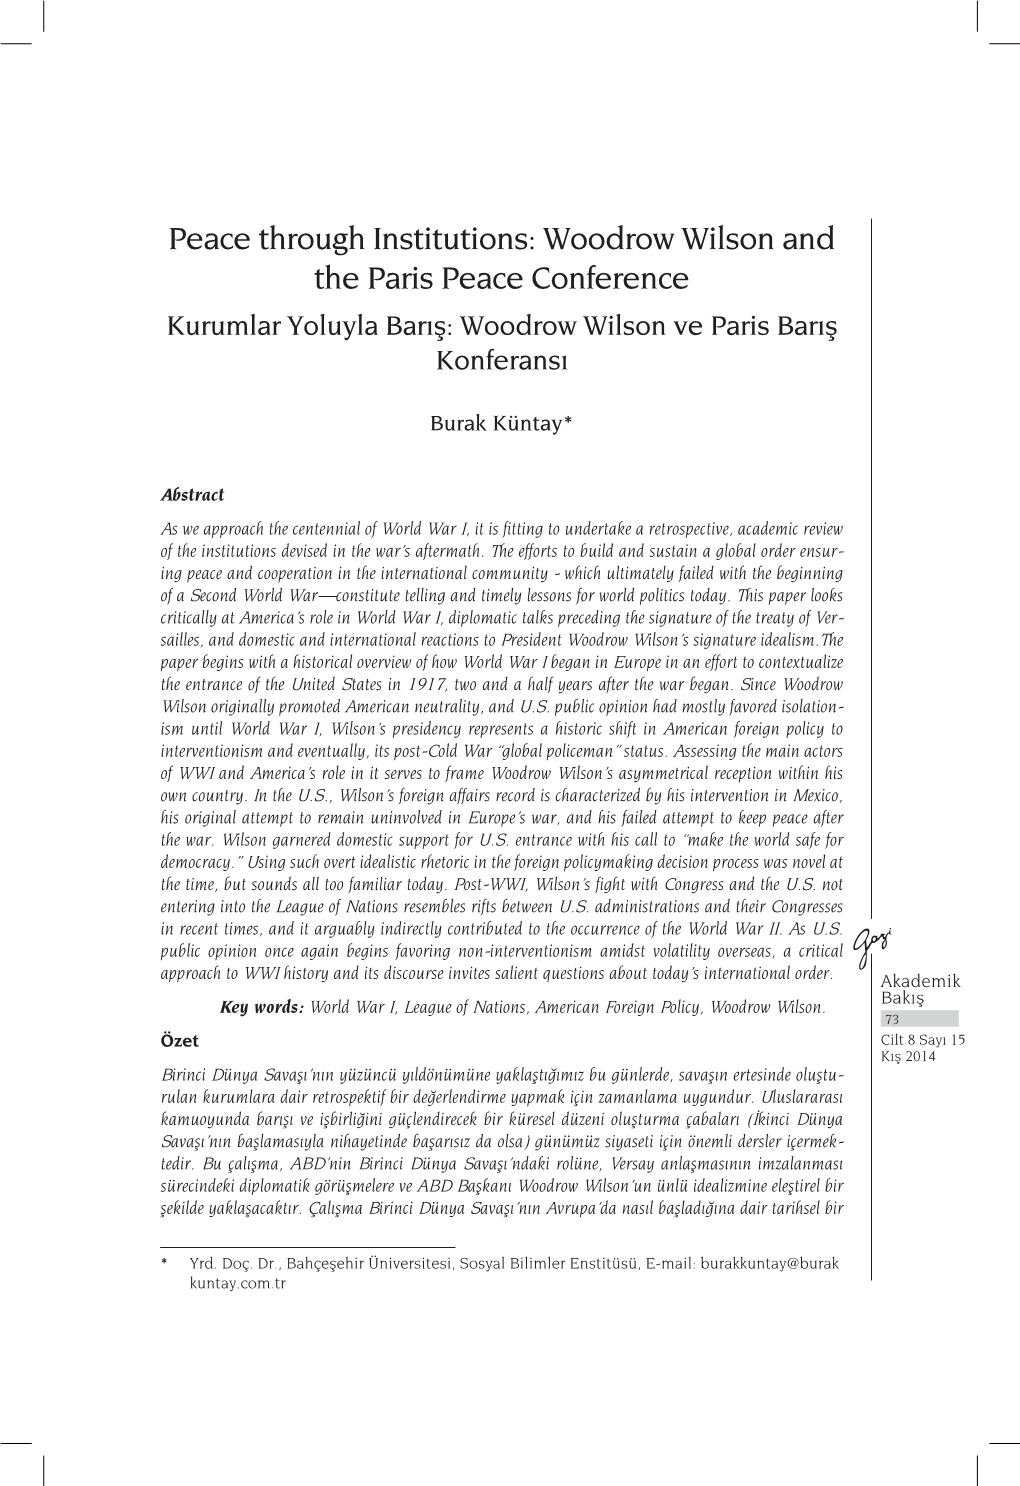 Woodrow Wilson and the Paris Peace Conference Kurumlar Yoluyla Barış: Woodrow Wilson Ve Paris Barış Konferansı